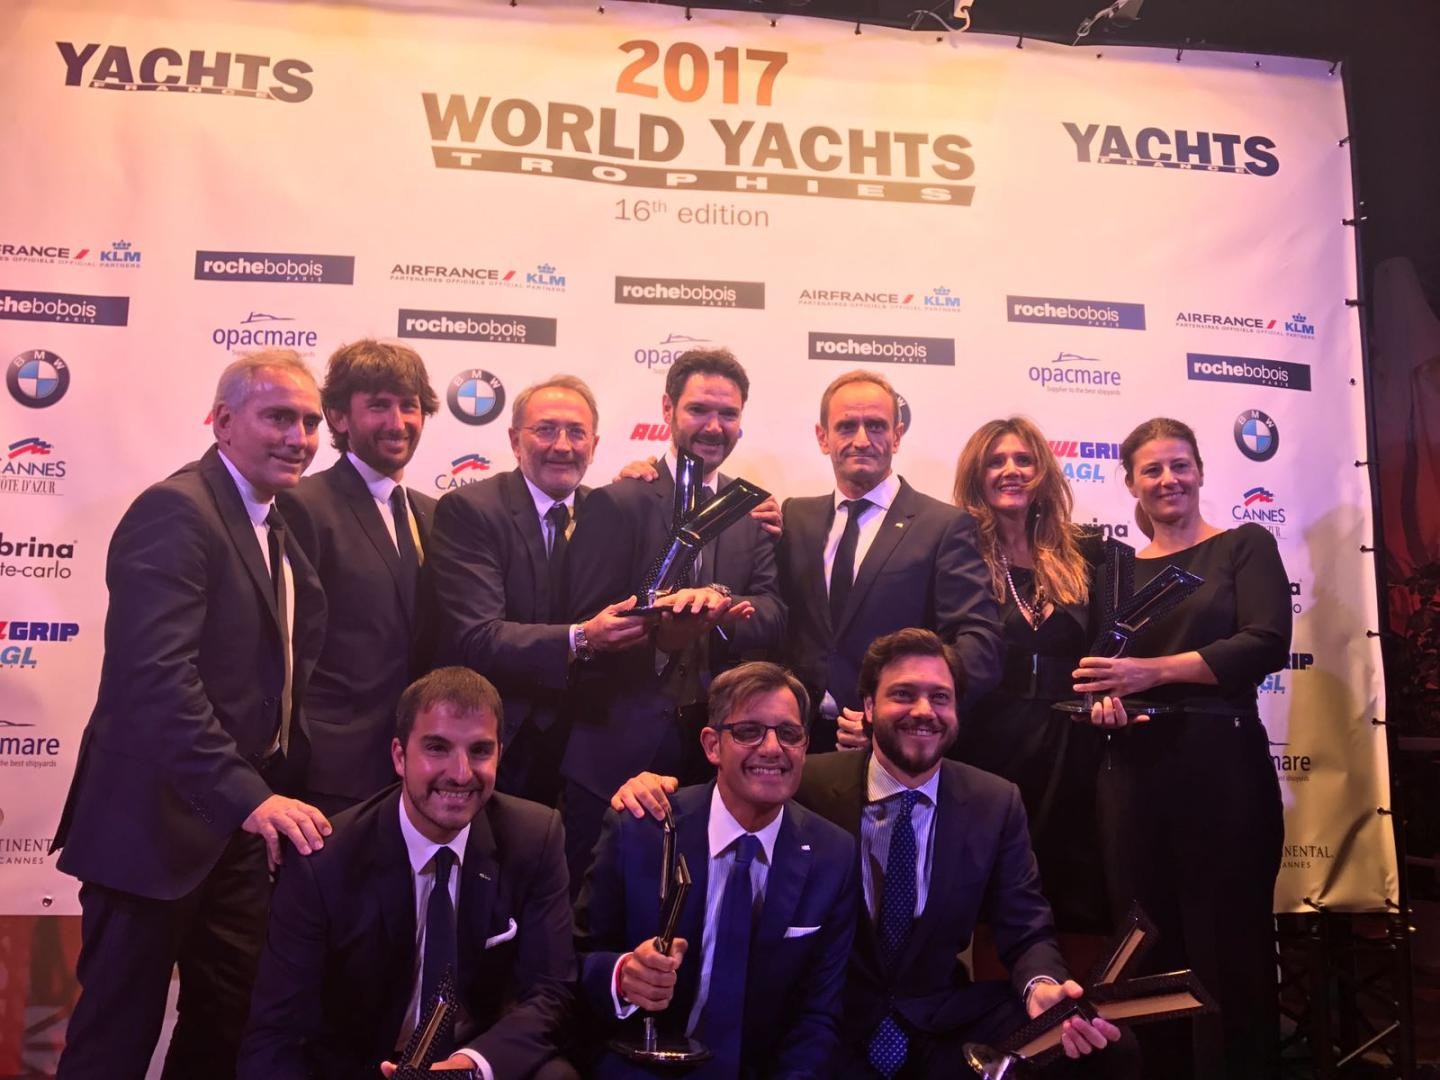 Ferretti Group Cantiere dell'Anno 2017 con 5 Awards ai World Yachts Trophies